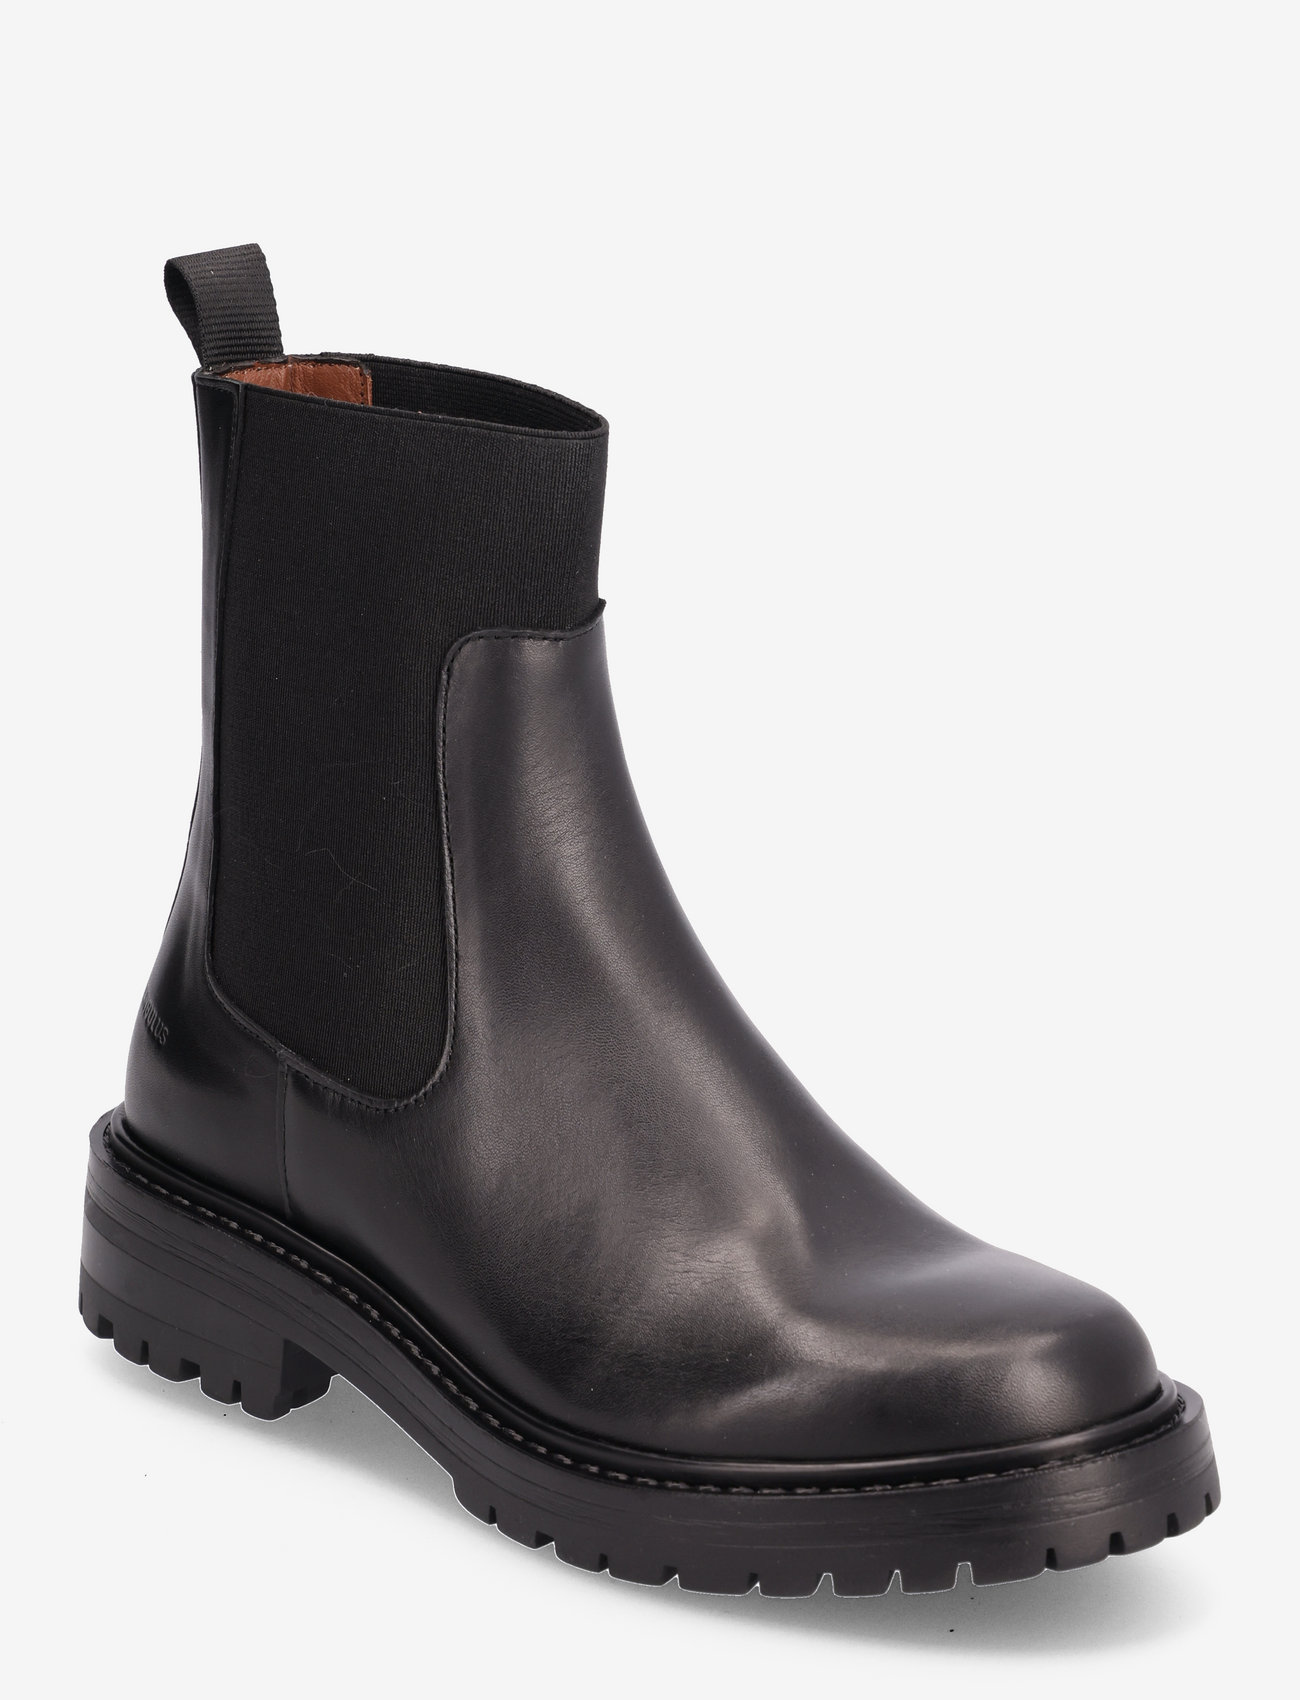 ANGULUS - Boots - flat - chelsea boots - 1605/001 black basic/black - 0